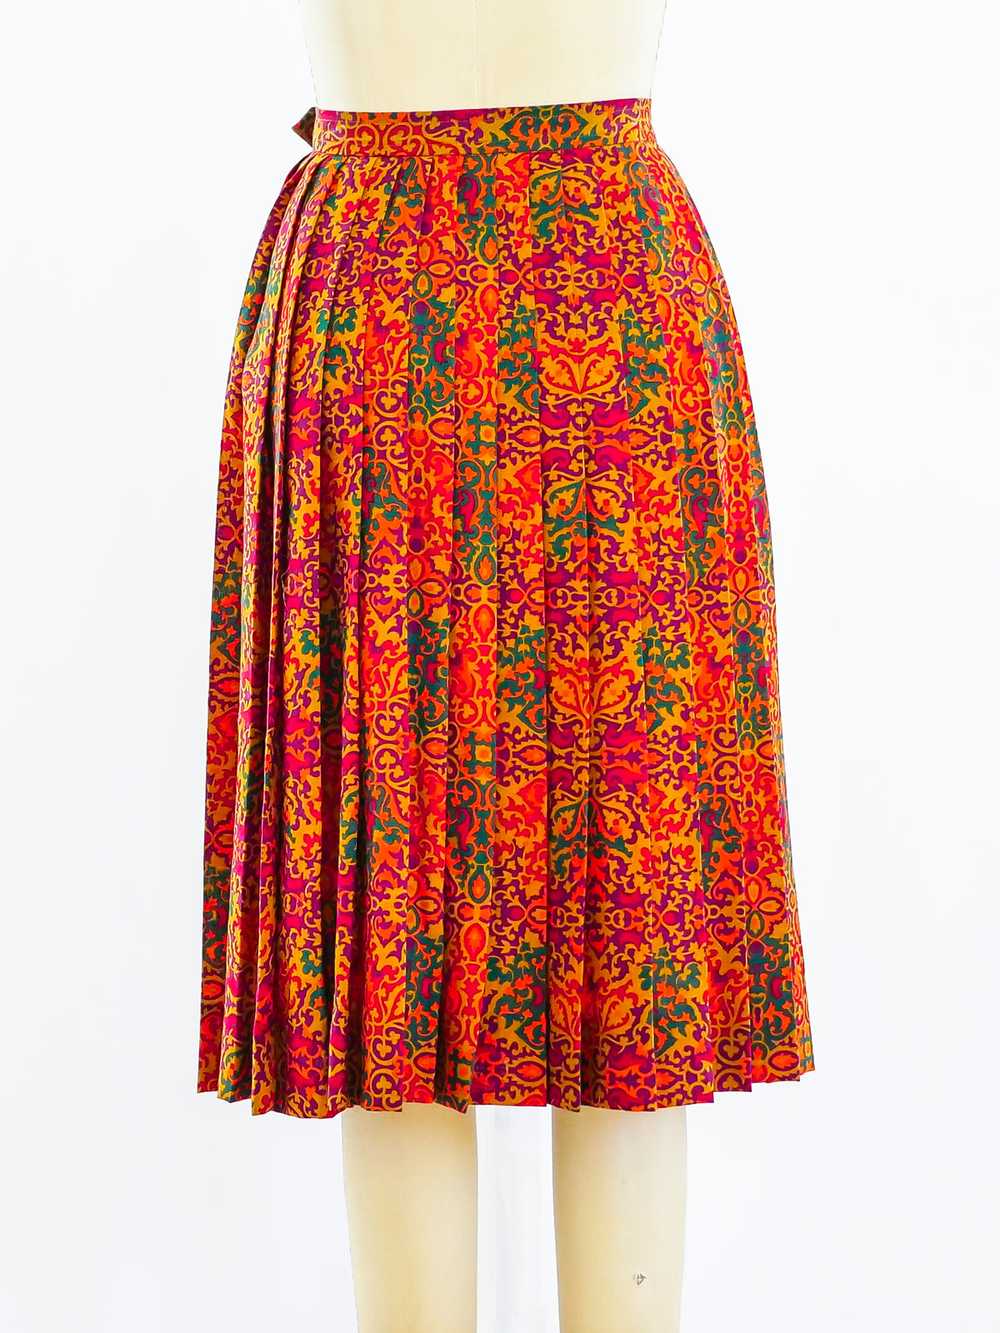 Yves Saint Laurent Pleated Print Skirt - image 3